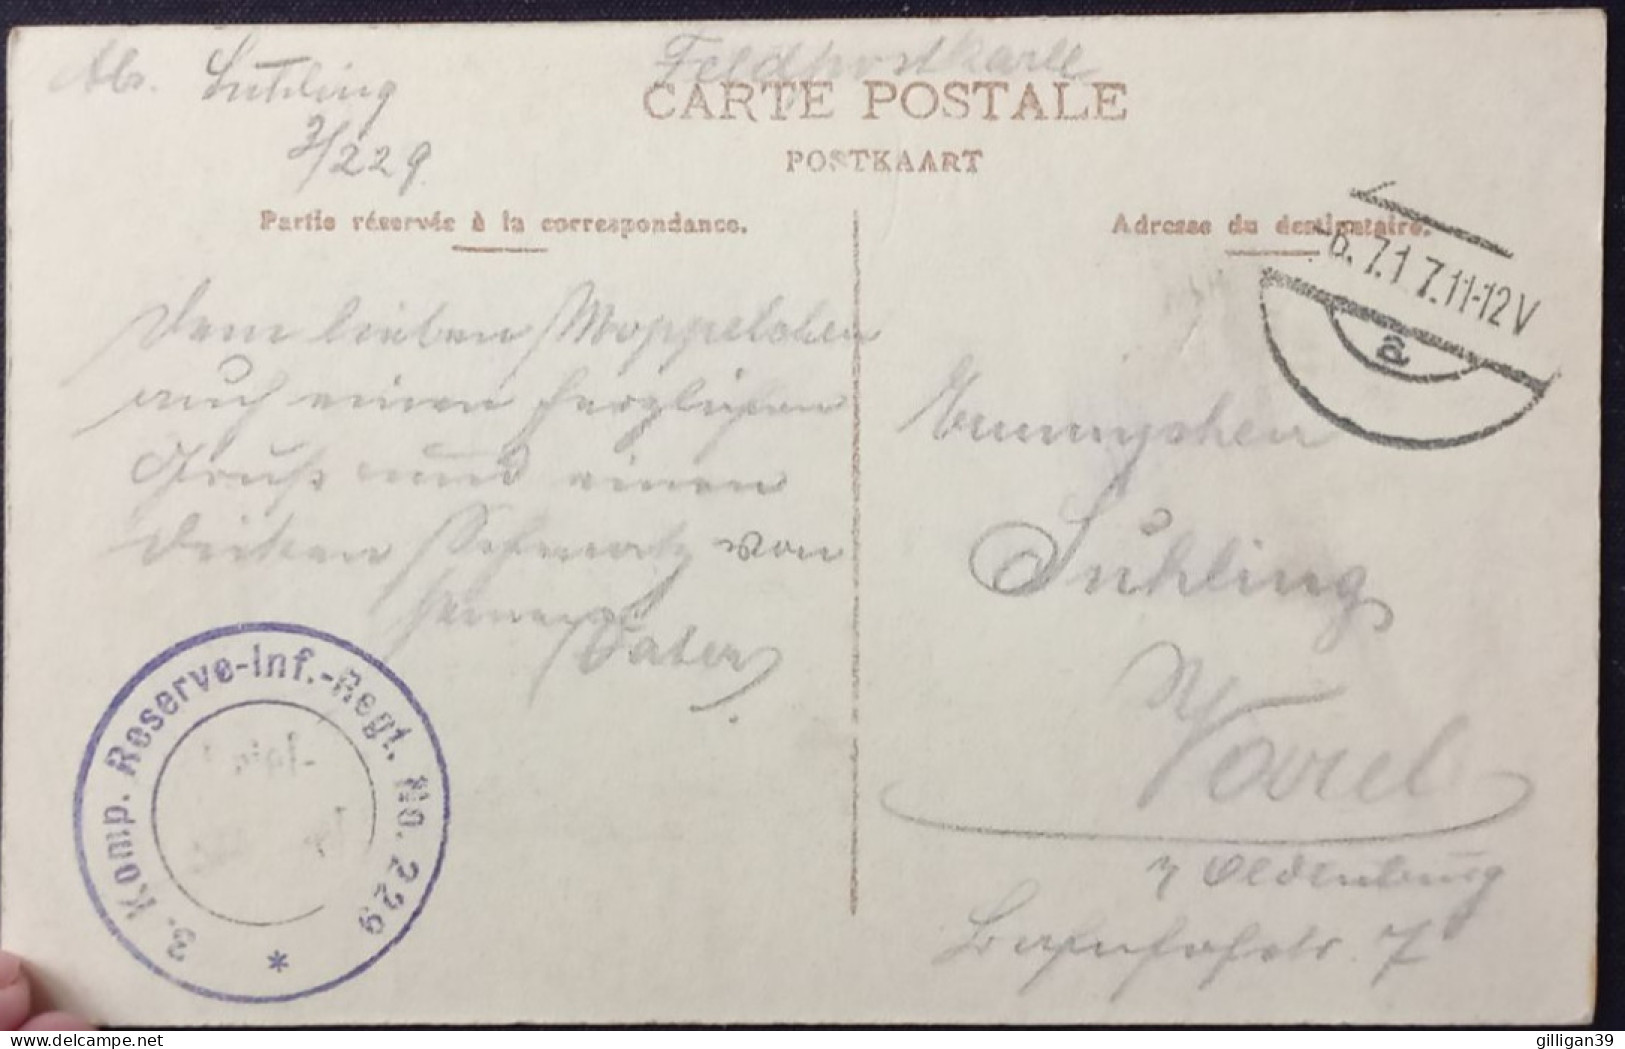 ROULERS, Rue Conscience, 3. Komp. Reserve-inf.-Regt. No. 229, Feldpost 1917 - Roeselare